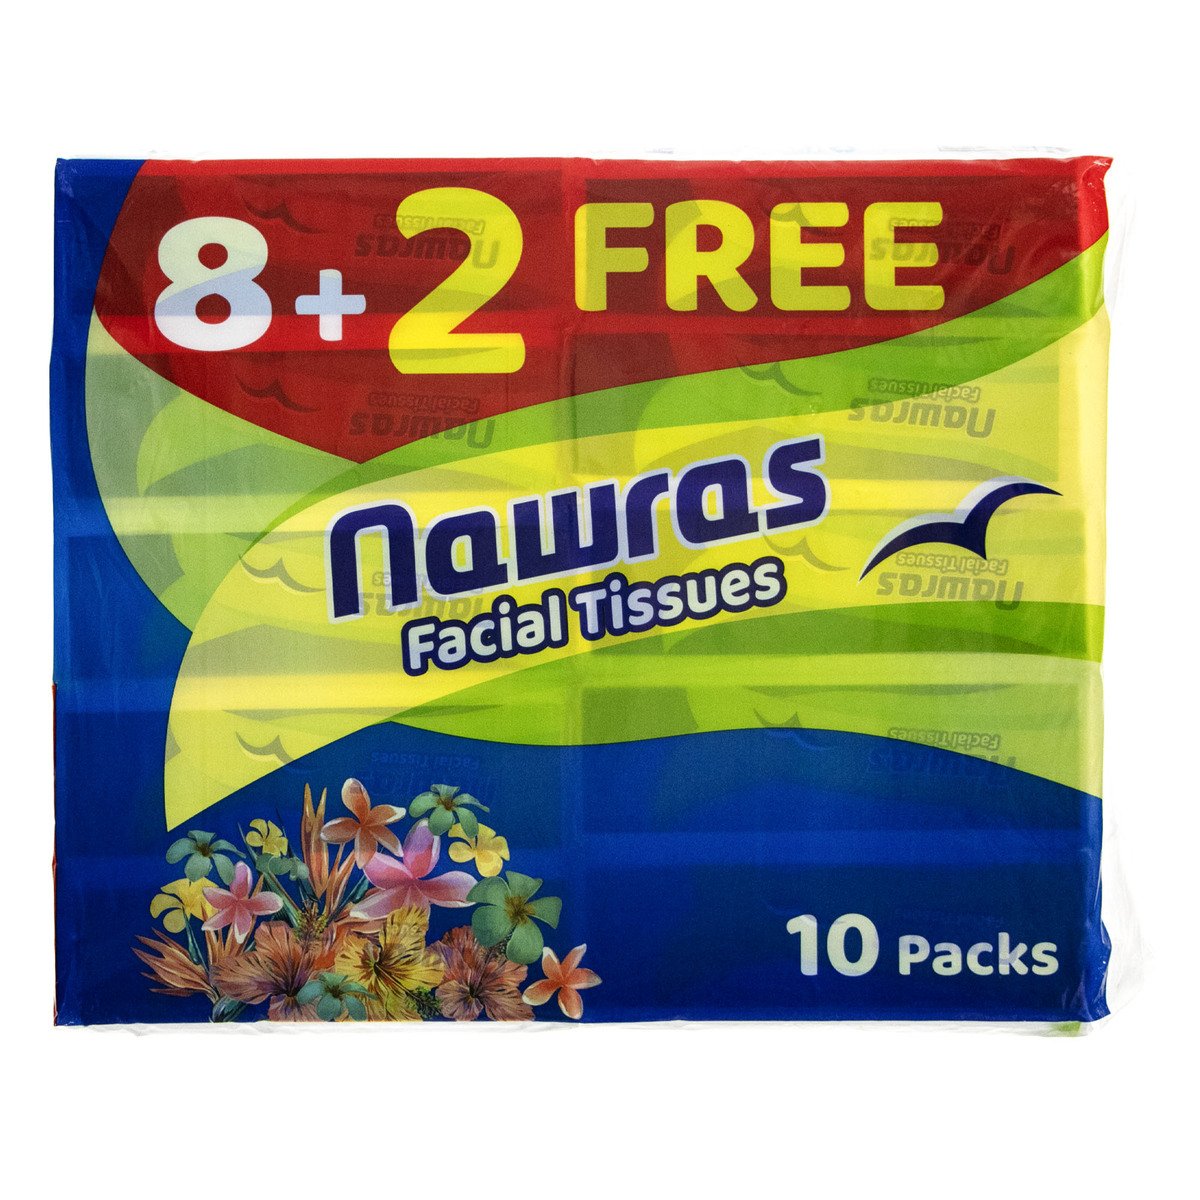 Nawras Facial Tissue 2ply 160 Sheets 8 + 2